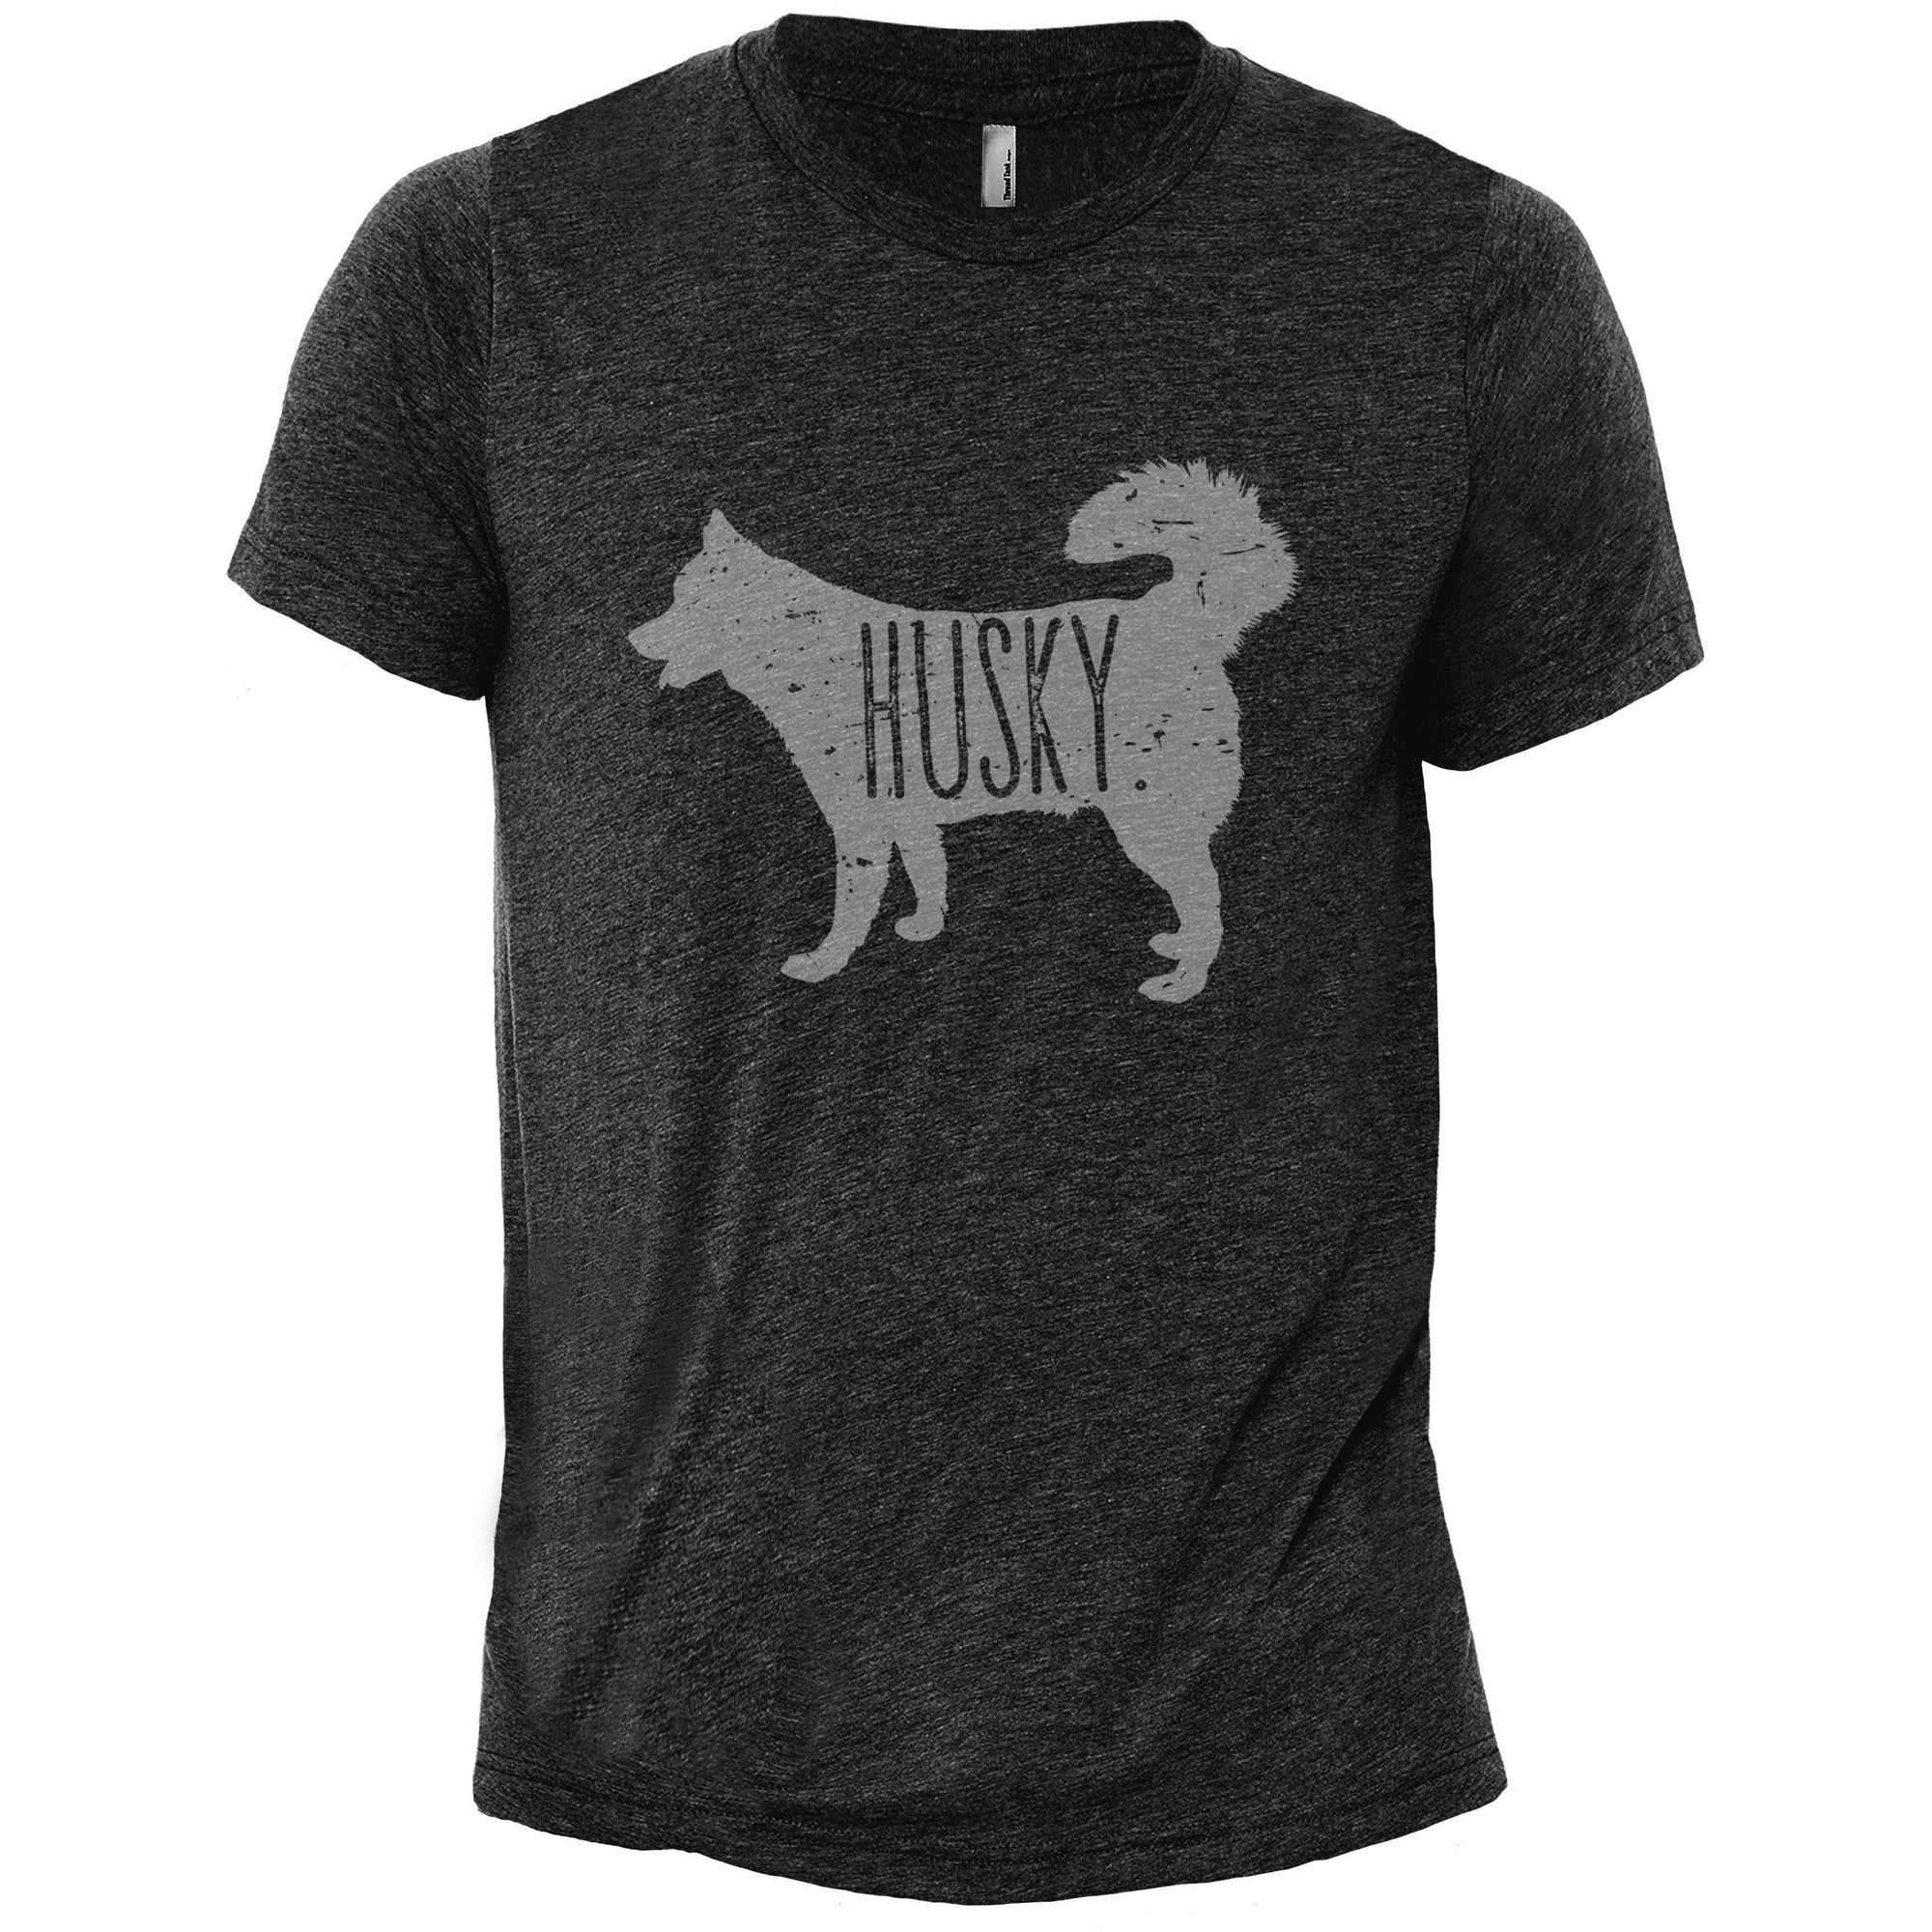 Husky Dog Silhouette Heather Grey Printed Graphic Men's Crew T-Shirt Tee